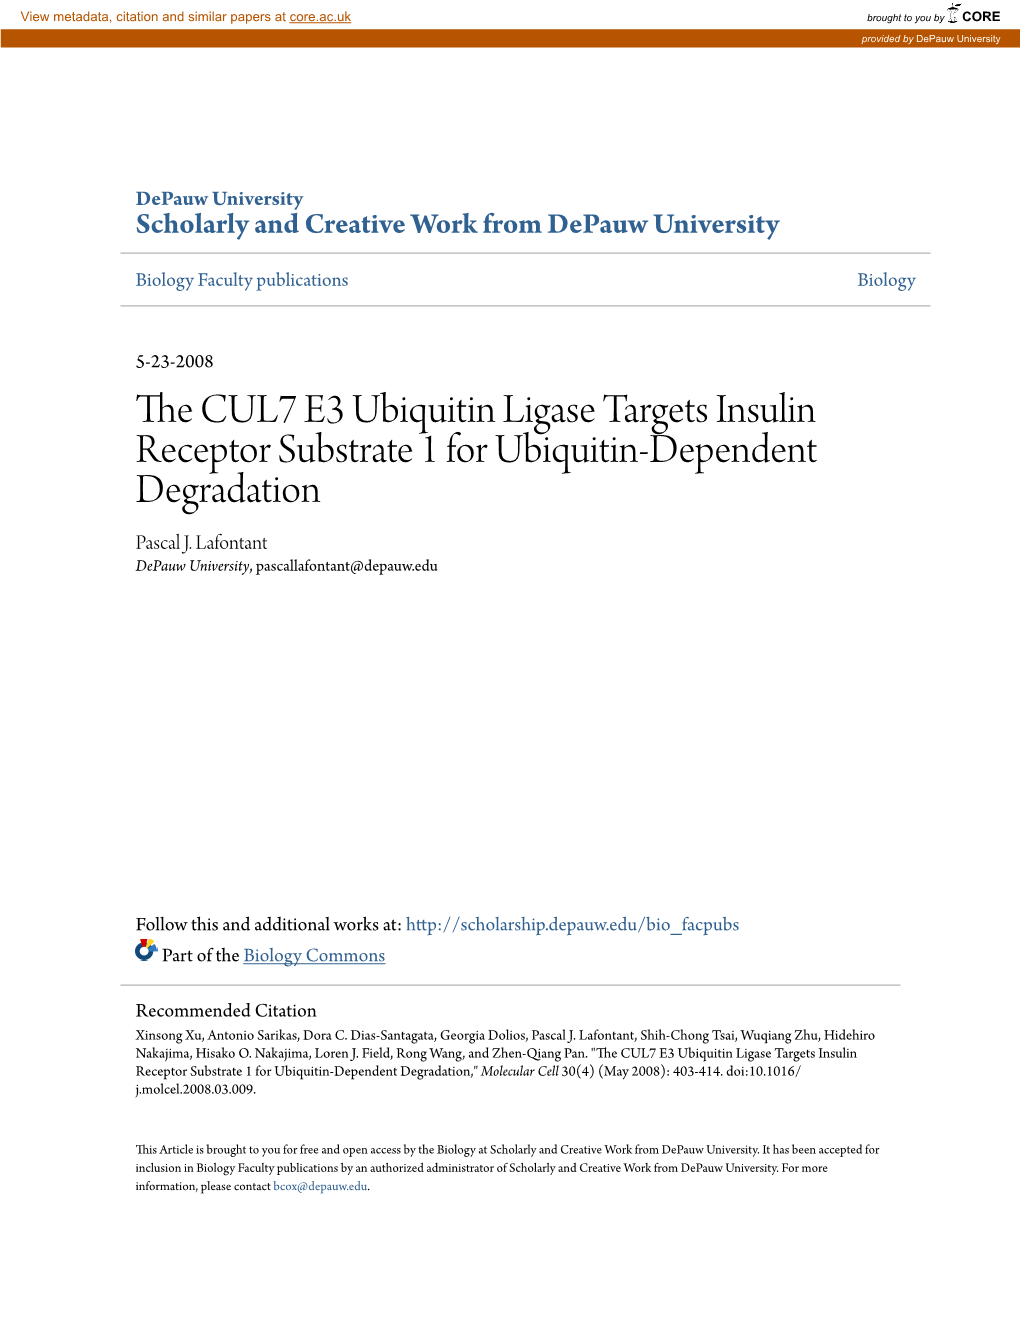 The CUL7 E3 Ubiquitin Ligase Targets Insulin Receptor Substrate 1 for Ubiquitin-Dependent Degradation